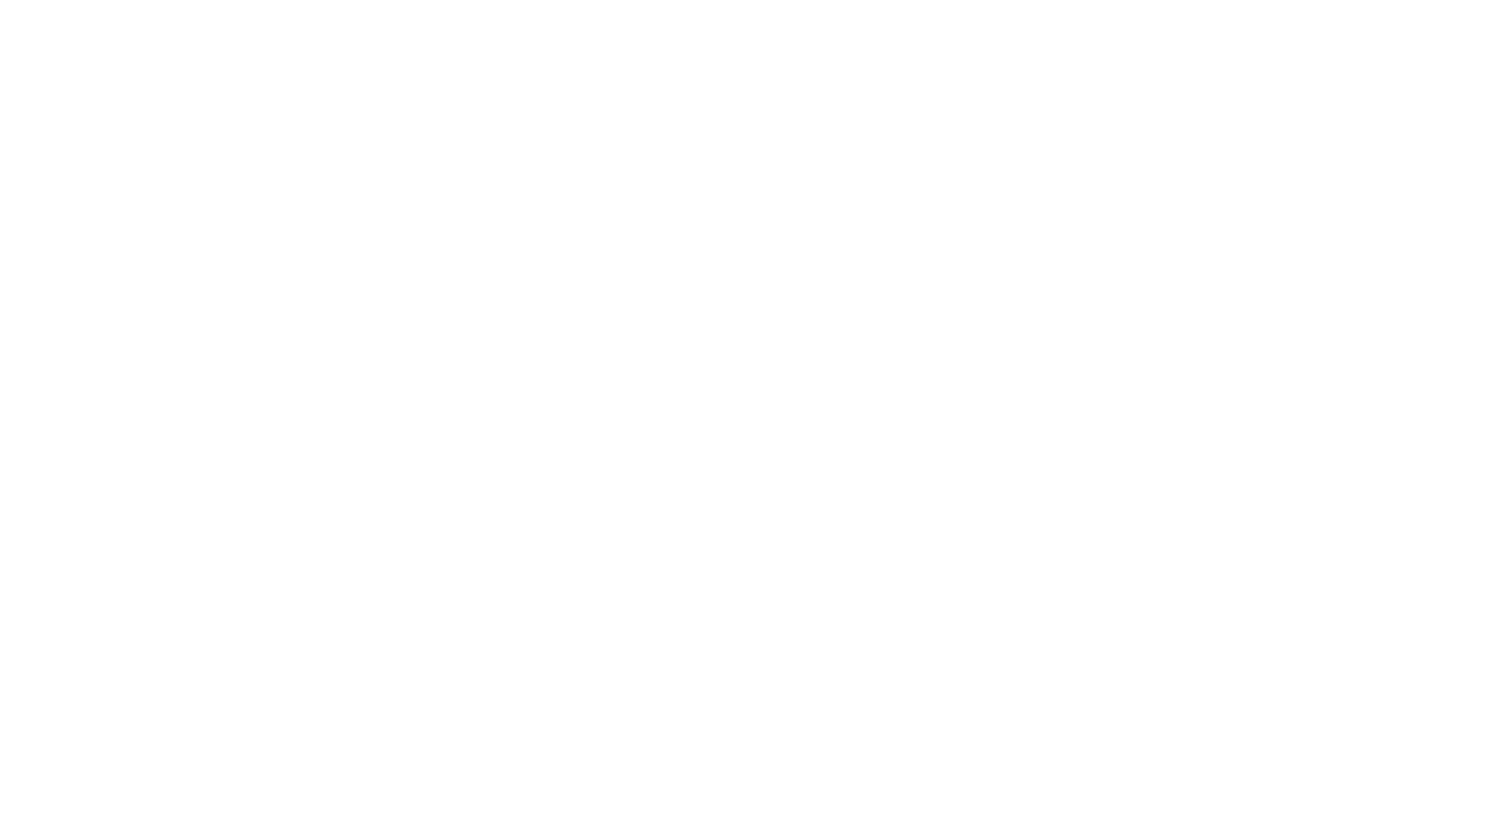 Craft Capital